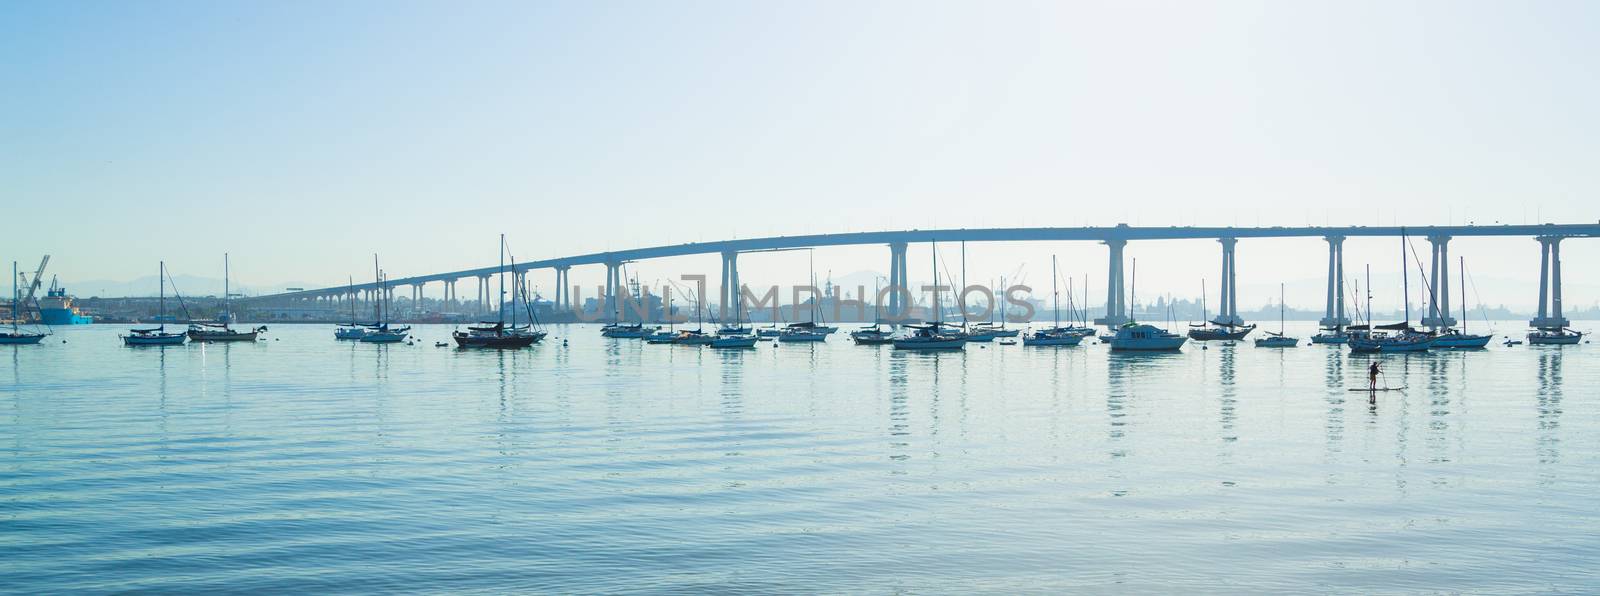 San Diego Coronado Bridge by Sid10